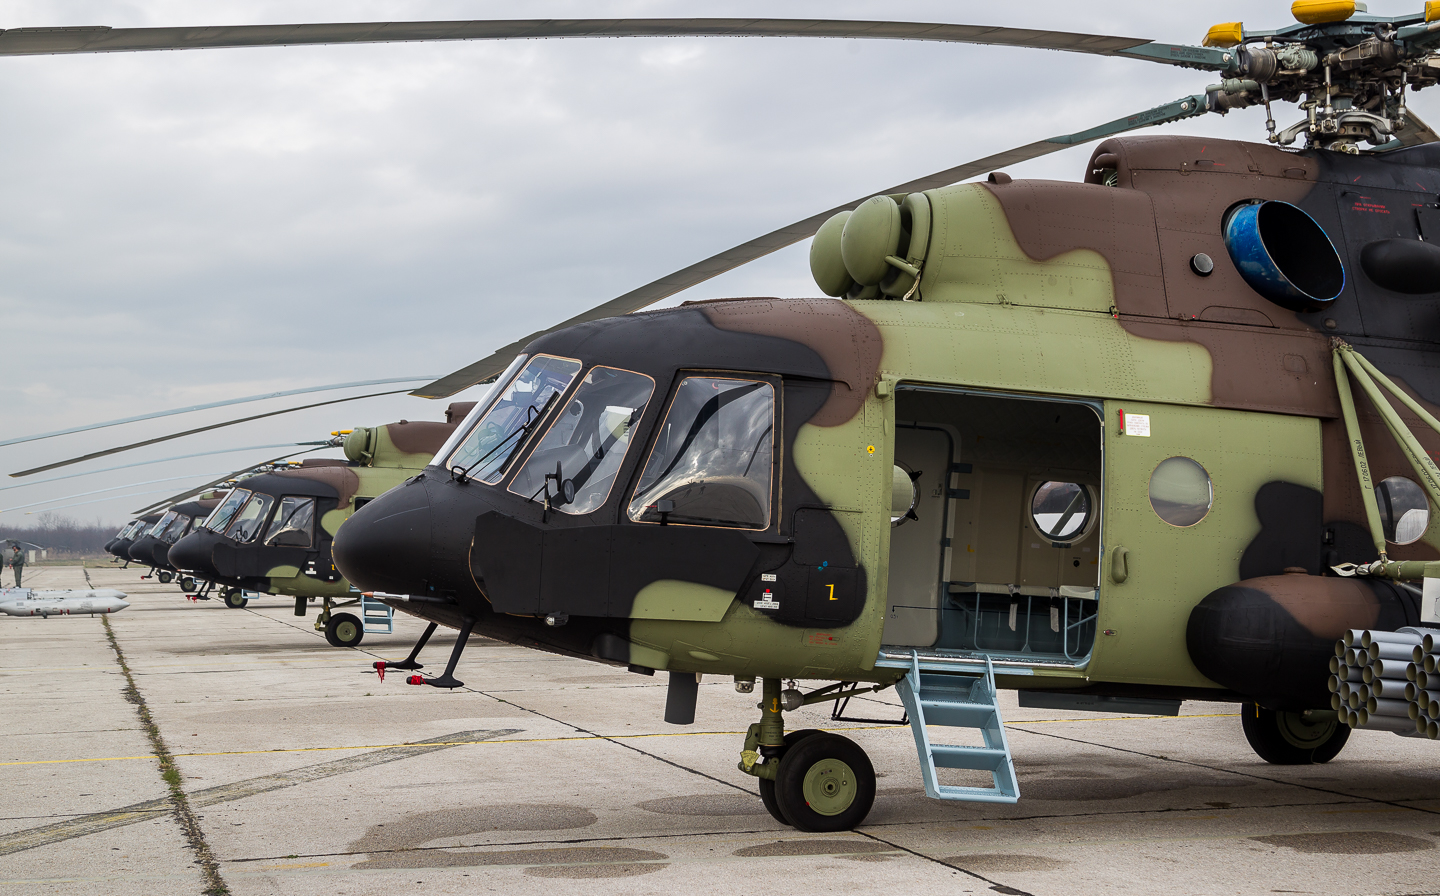 [ANALIZA] Srbija je nabavila veliki broj vojnih helikoptera, ali najmanje onih najpotrebnijih